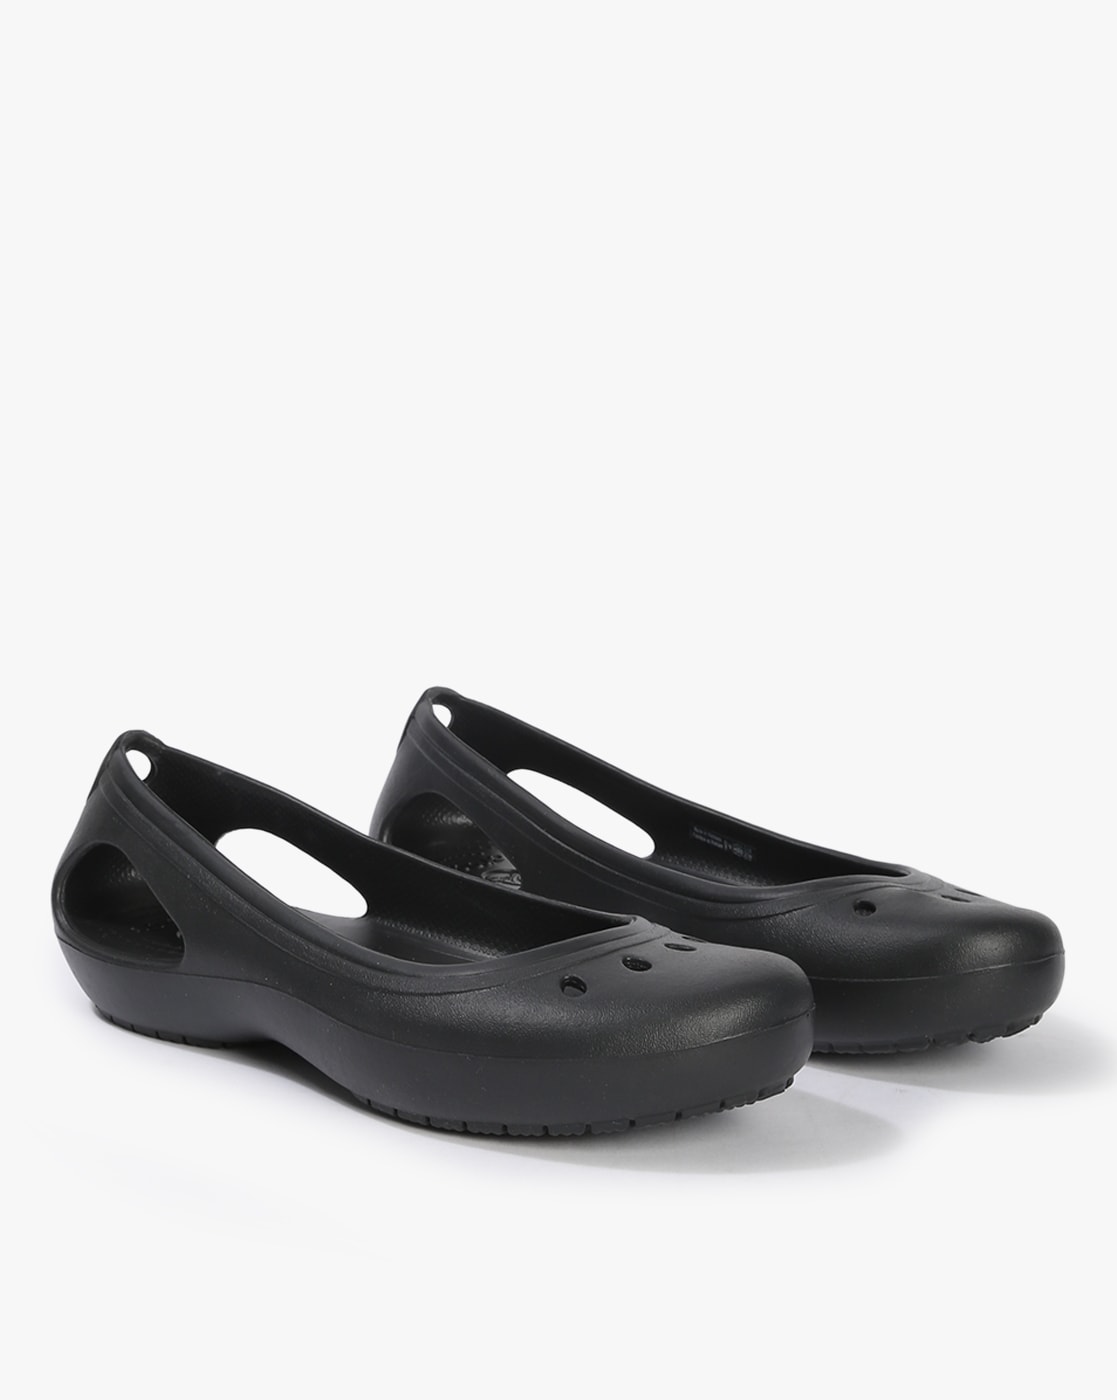 Buy Black Flat Shoes for Women by CROCS Online 